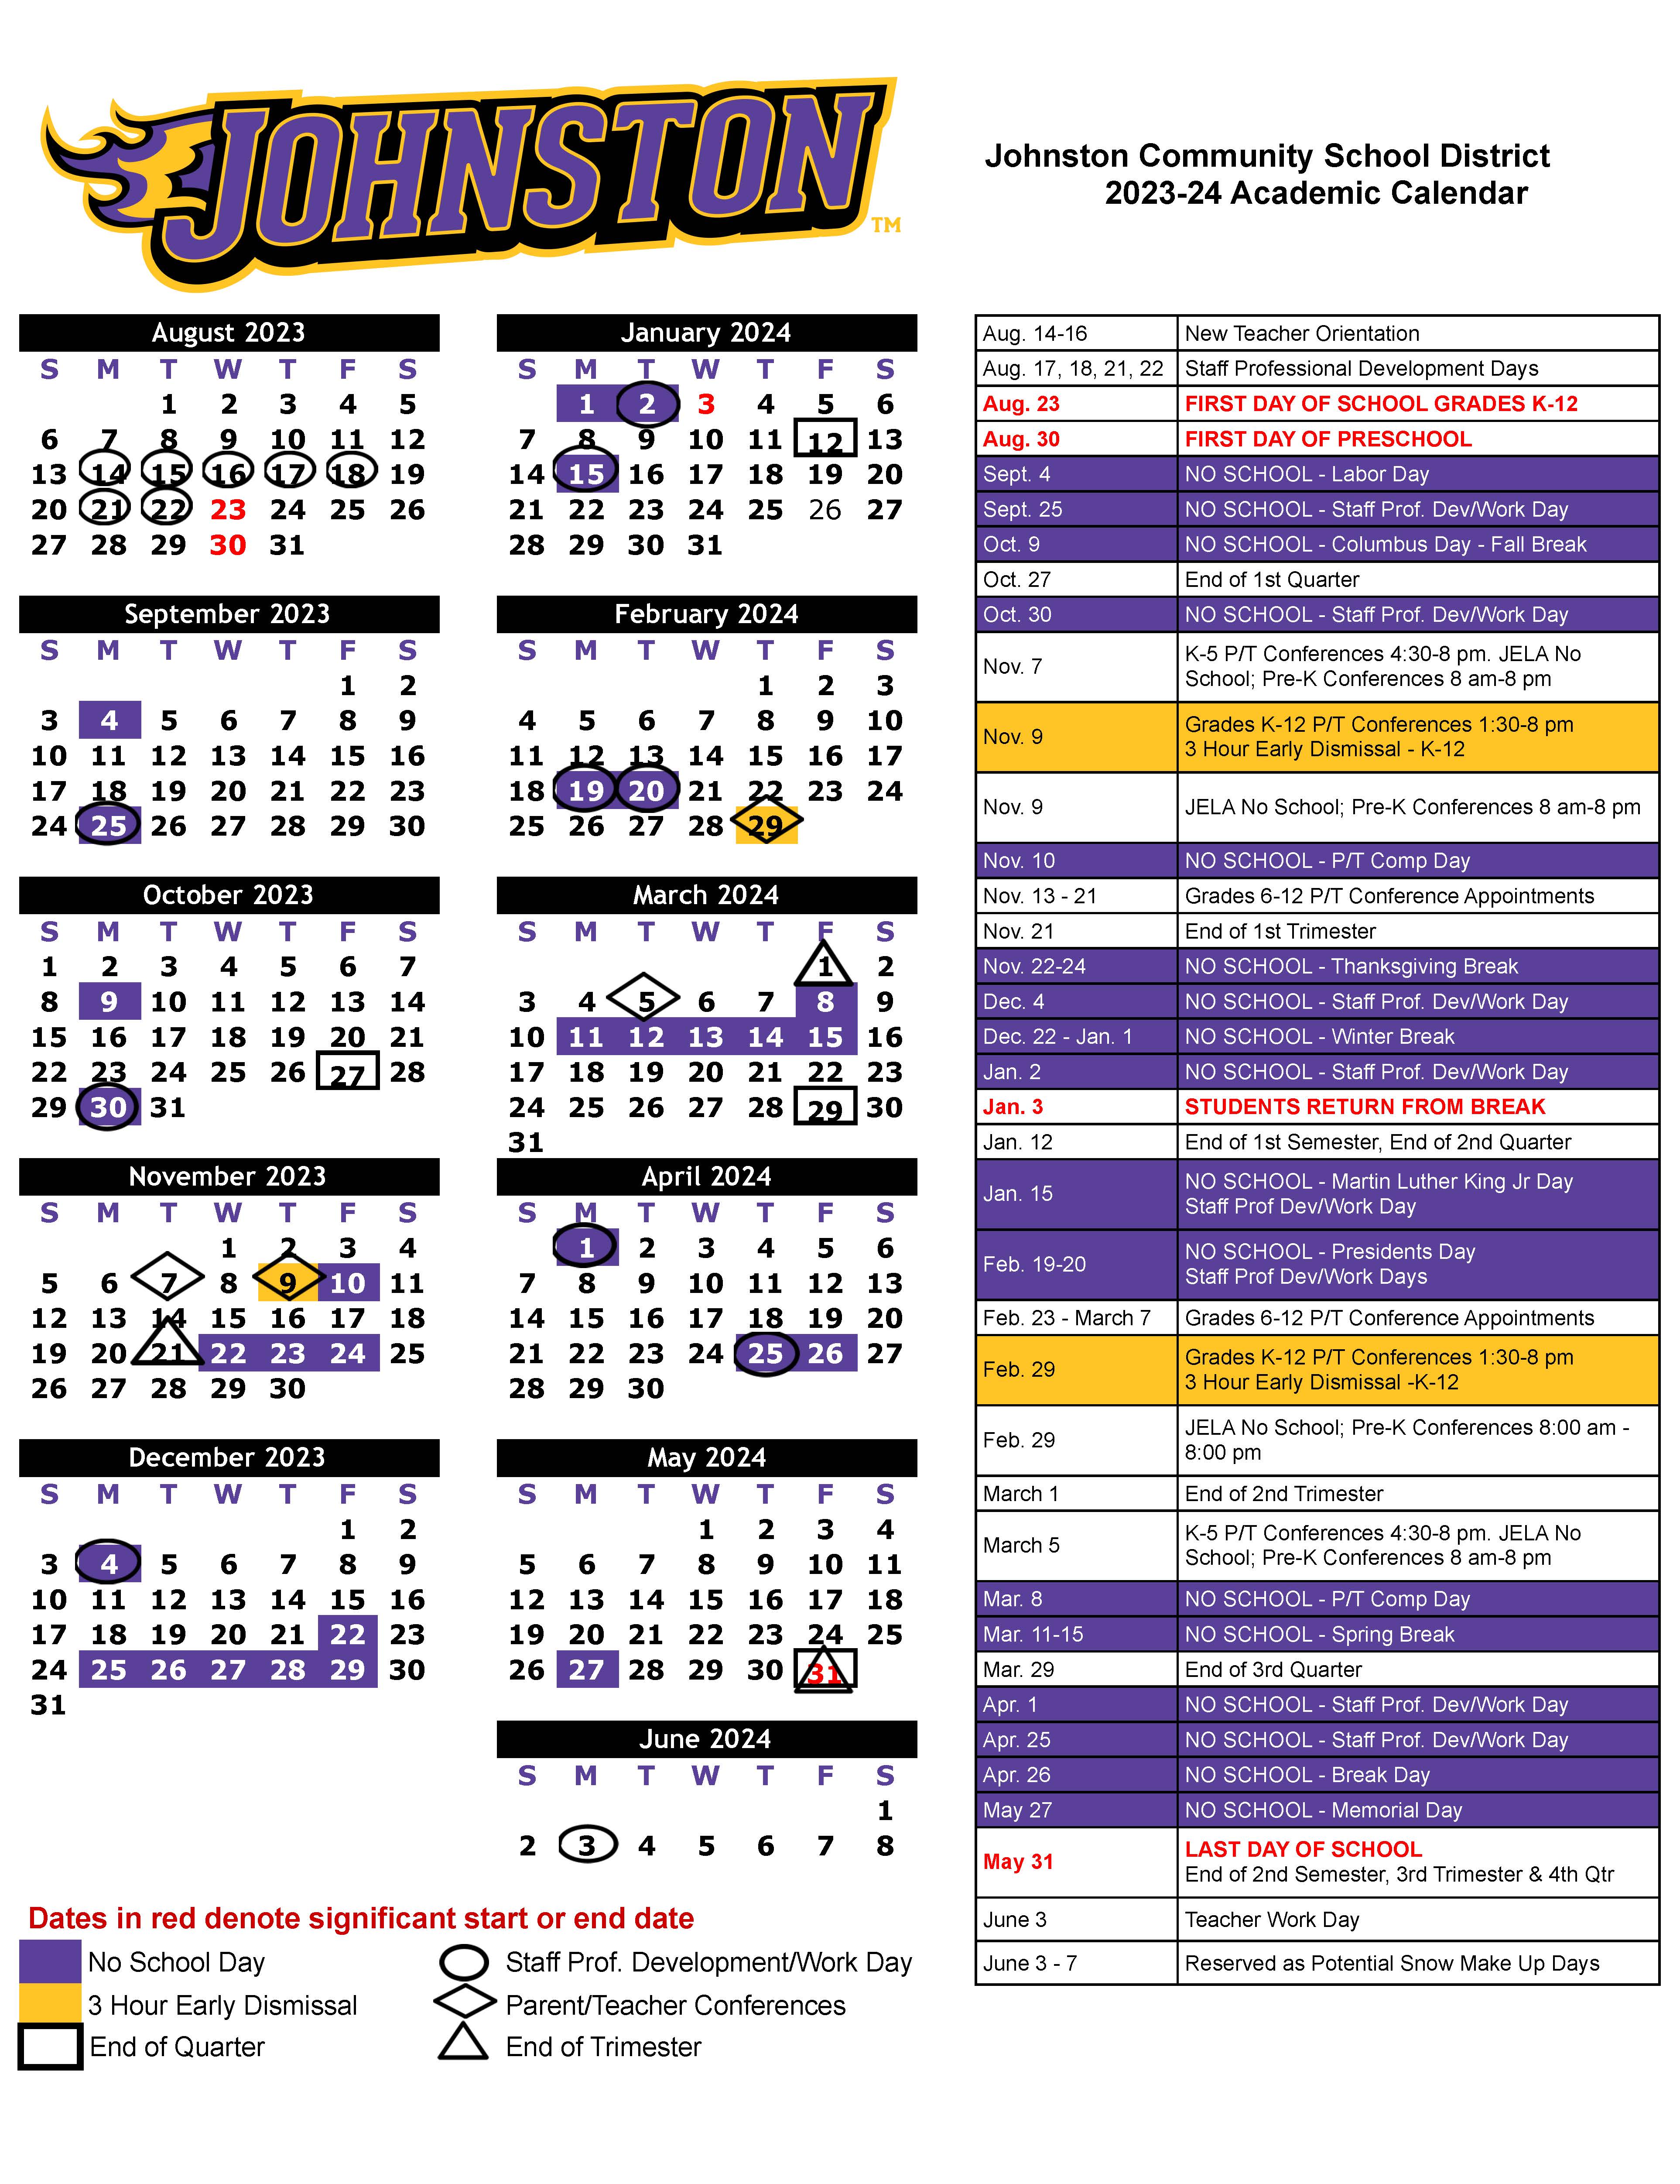 Johnston Community School District Calendar 2024 and 2025